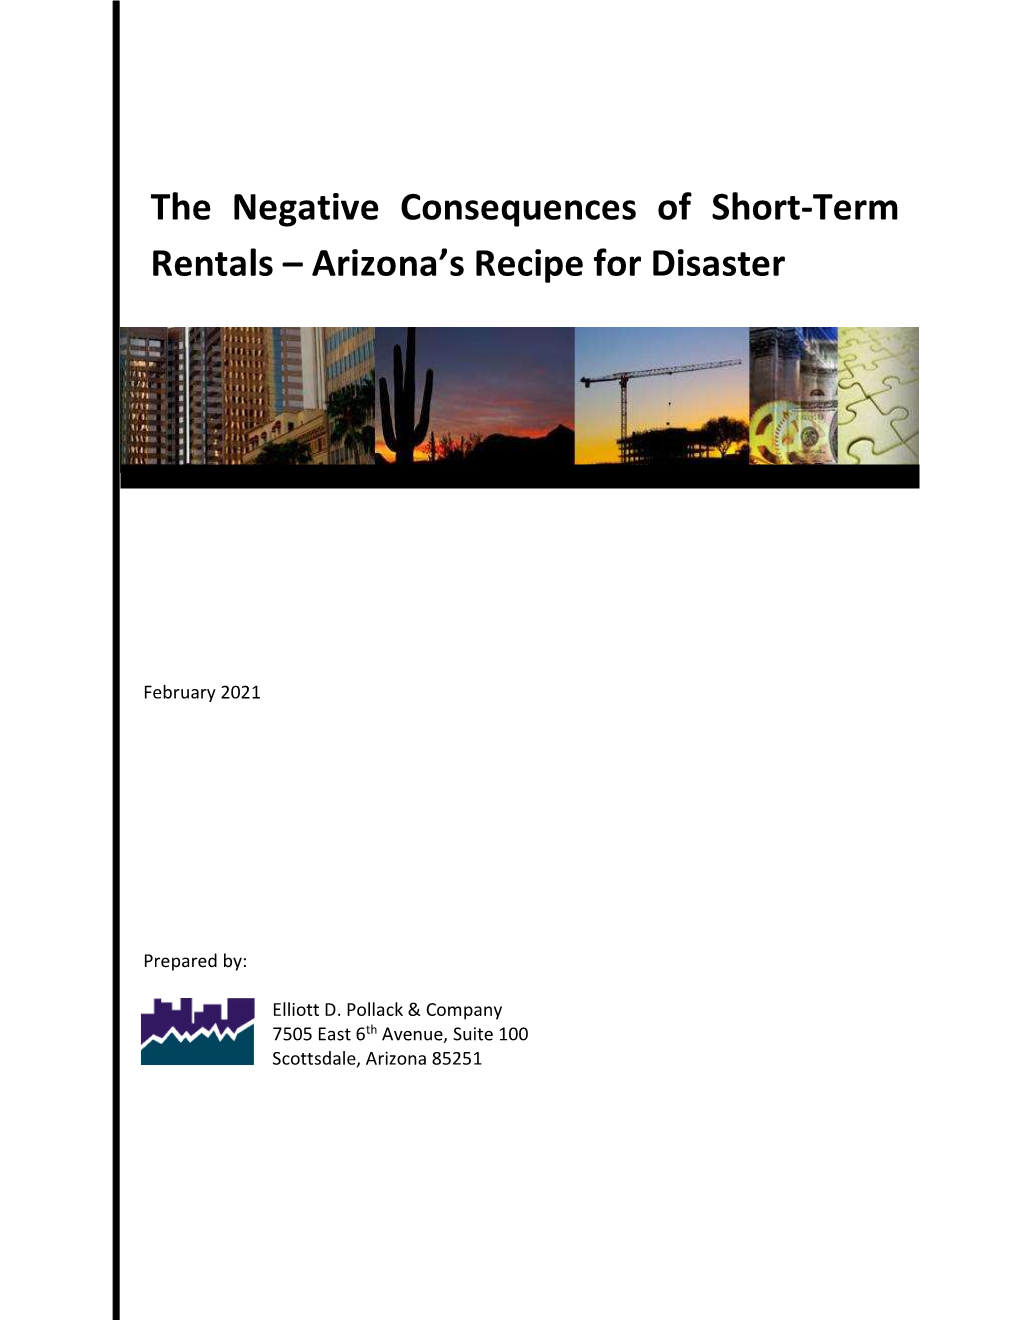 The Negative Consequences of Short-Term Rentals – Arizona's